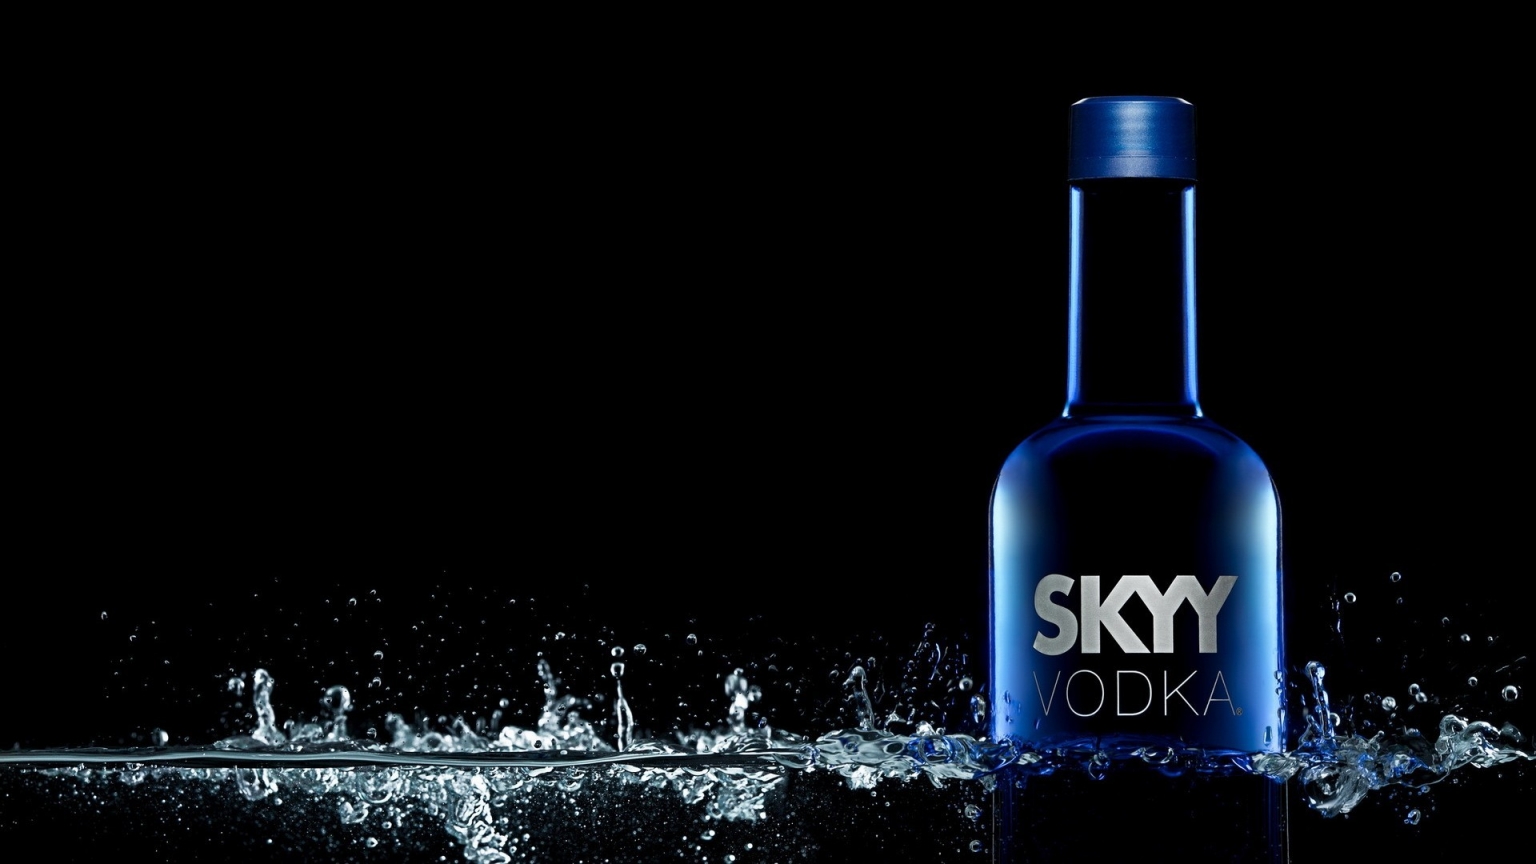 Skyy Vodka for 1536 x 864 HDTV resolution